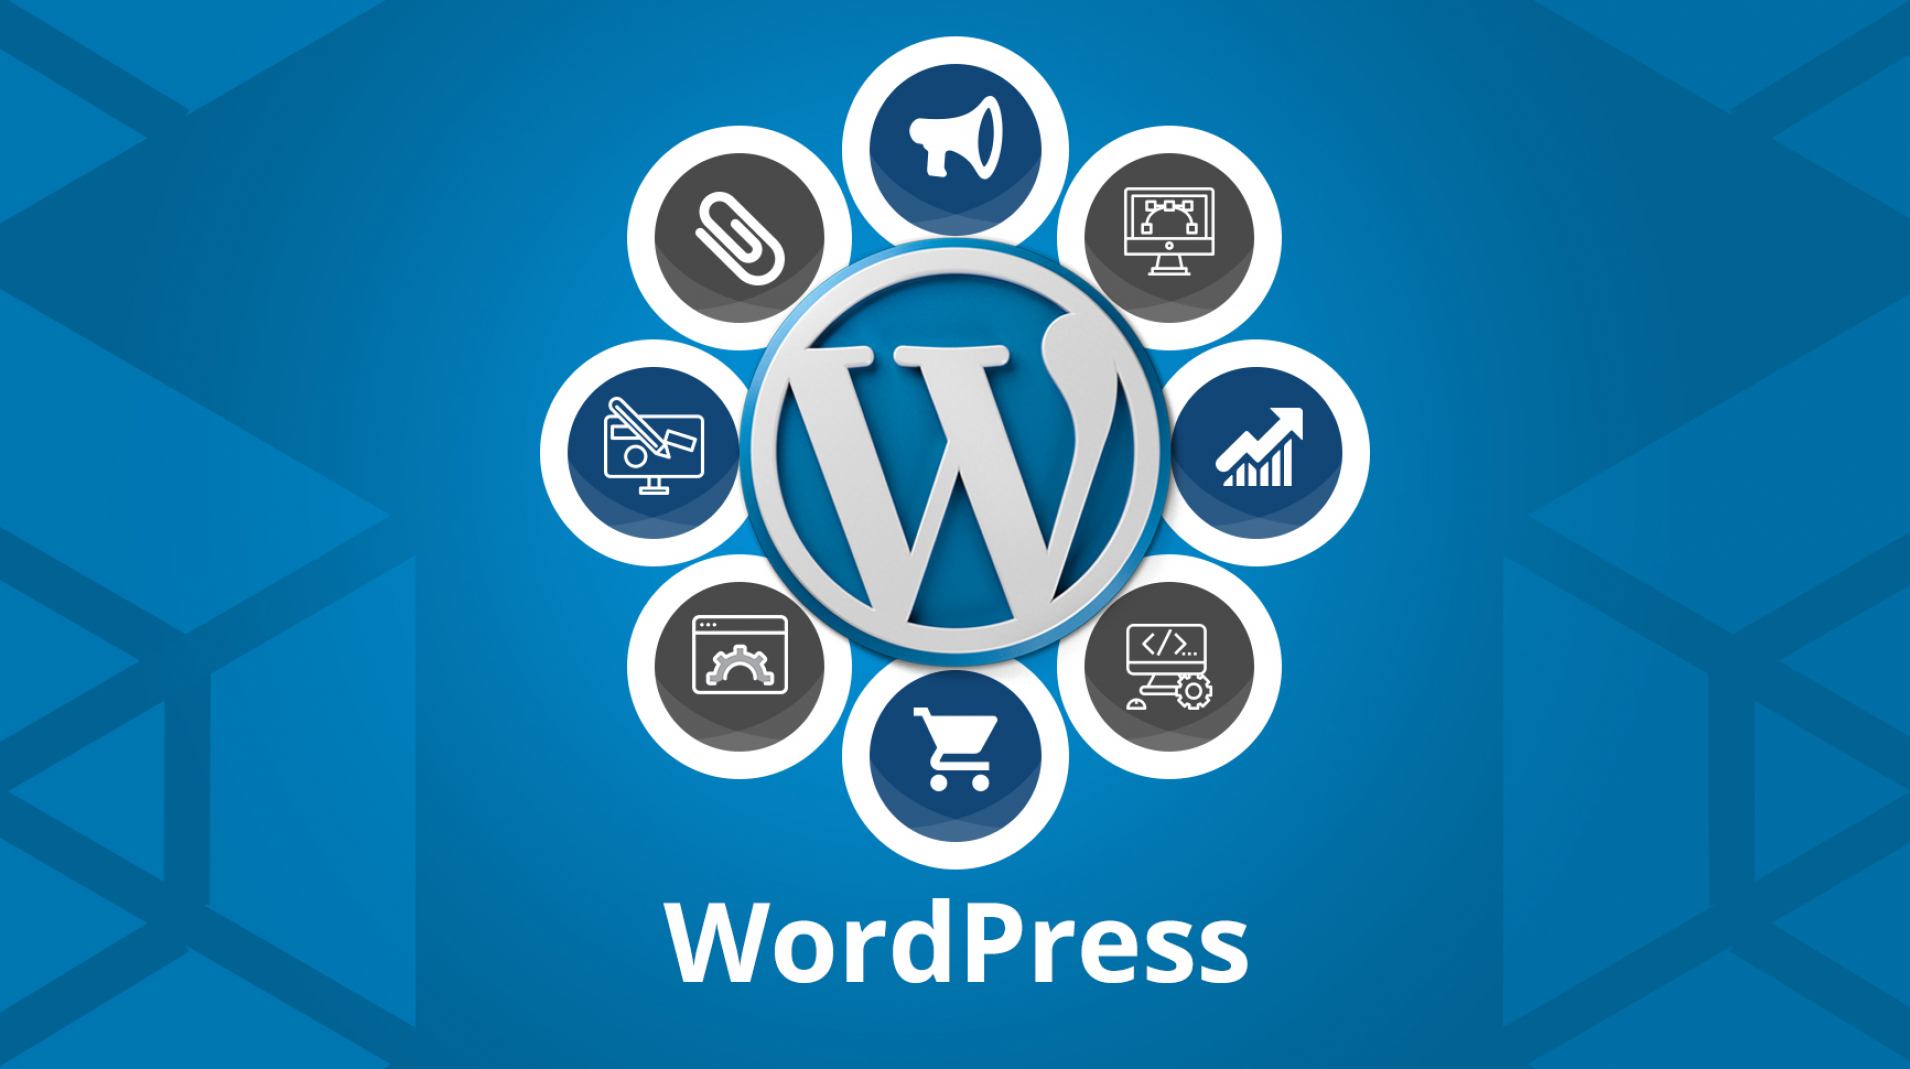 Managing a Wordpress Website